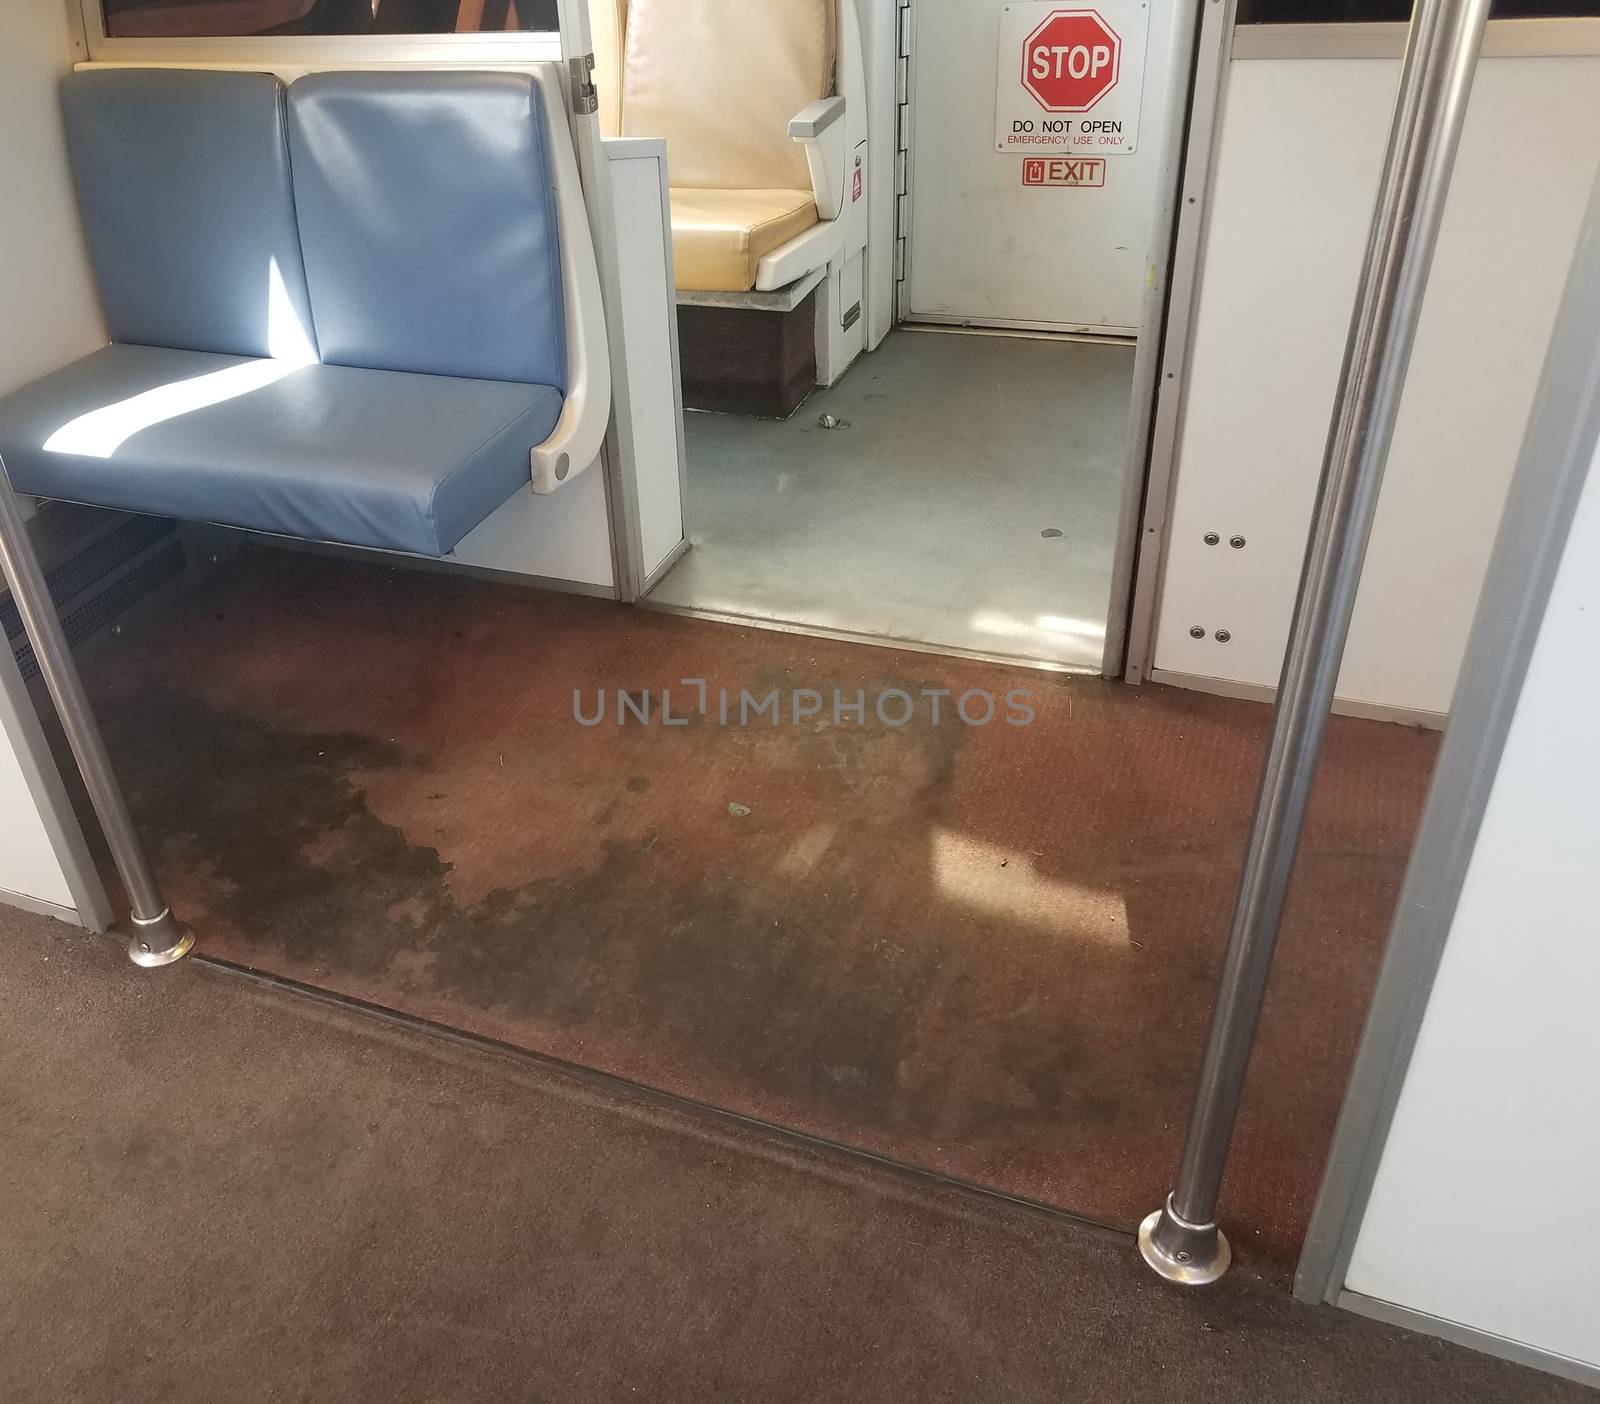 disgusting gross dirty carpet in public transportation train by stockphotofan1